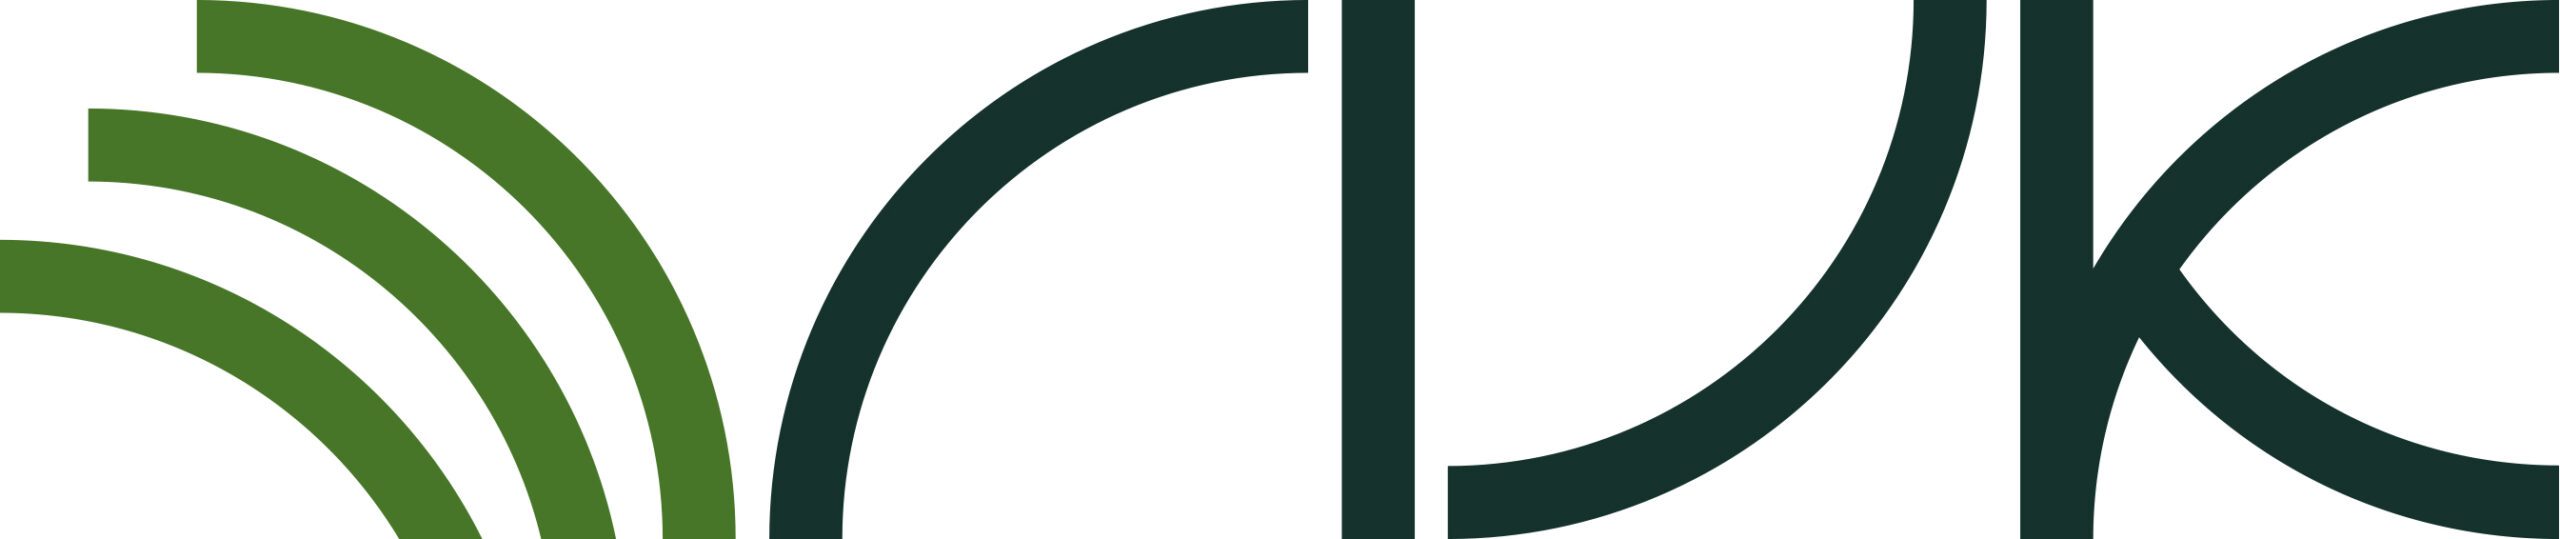 logo-RIJK-Kleur-HR